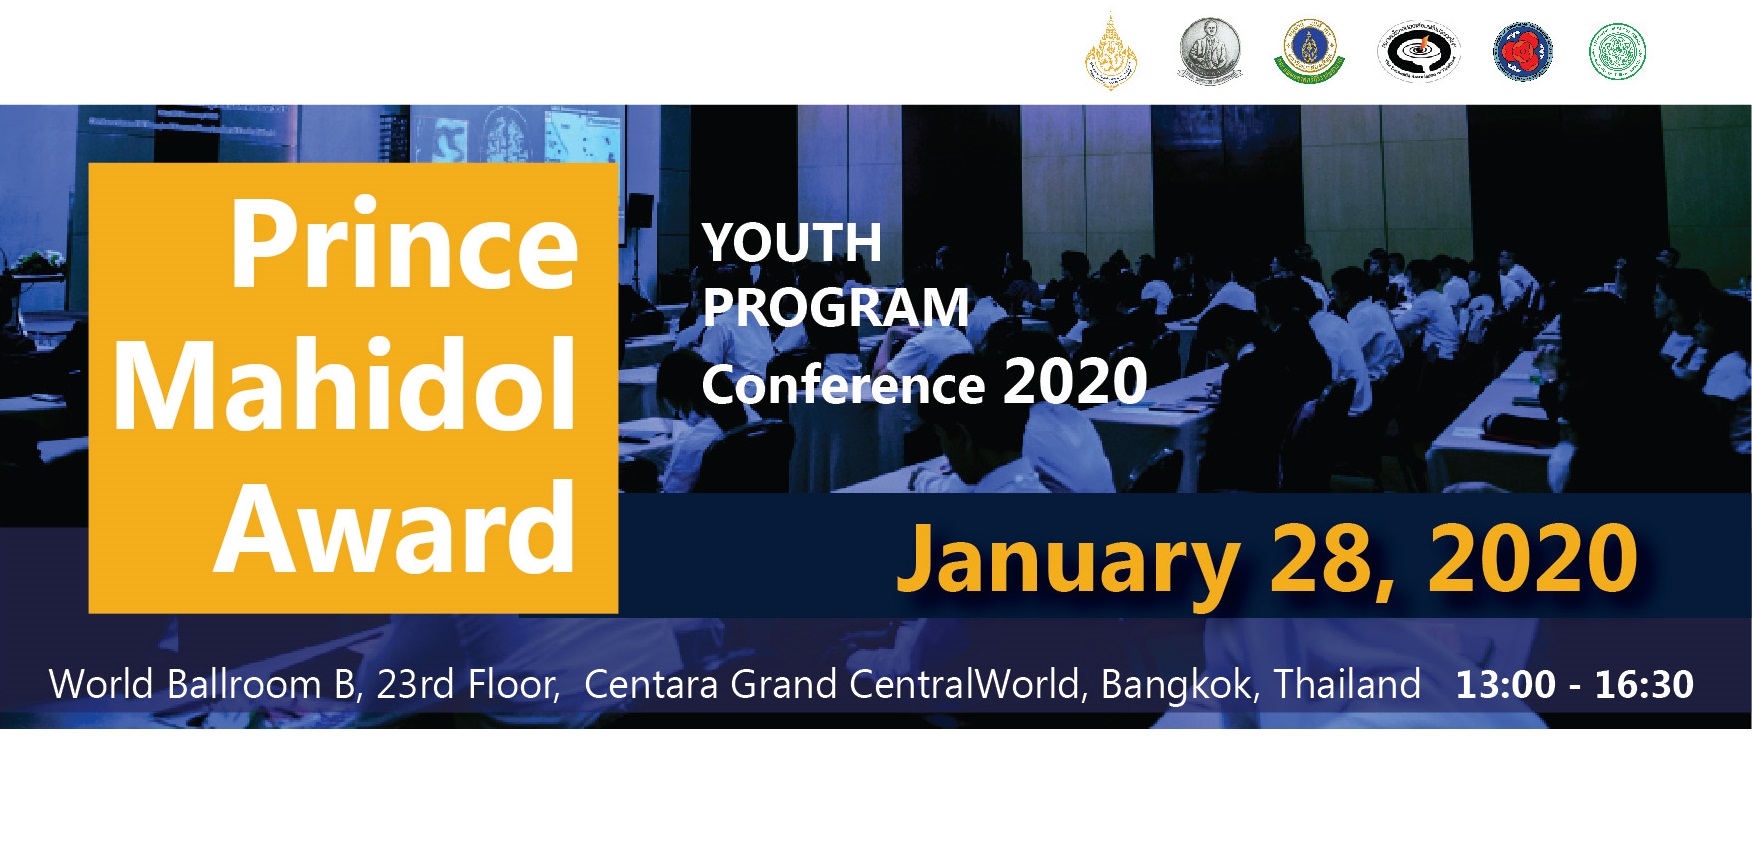 Prince Mahidol Award Youth Program Conference 2020